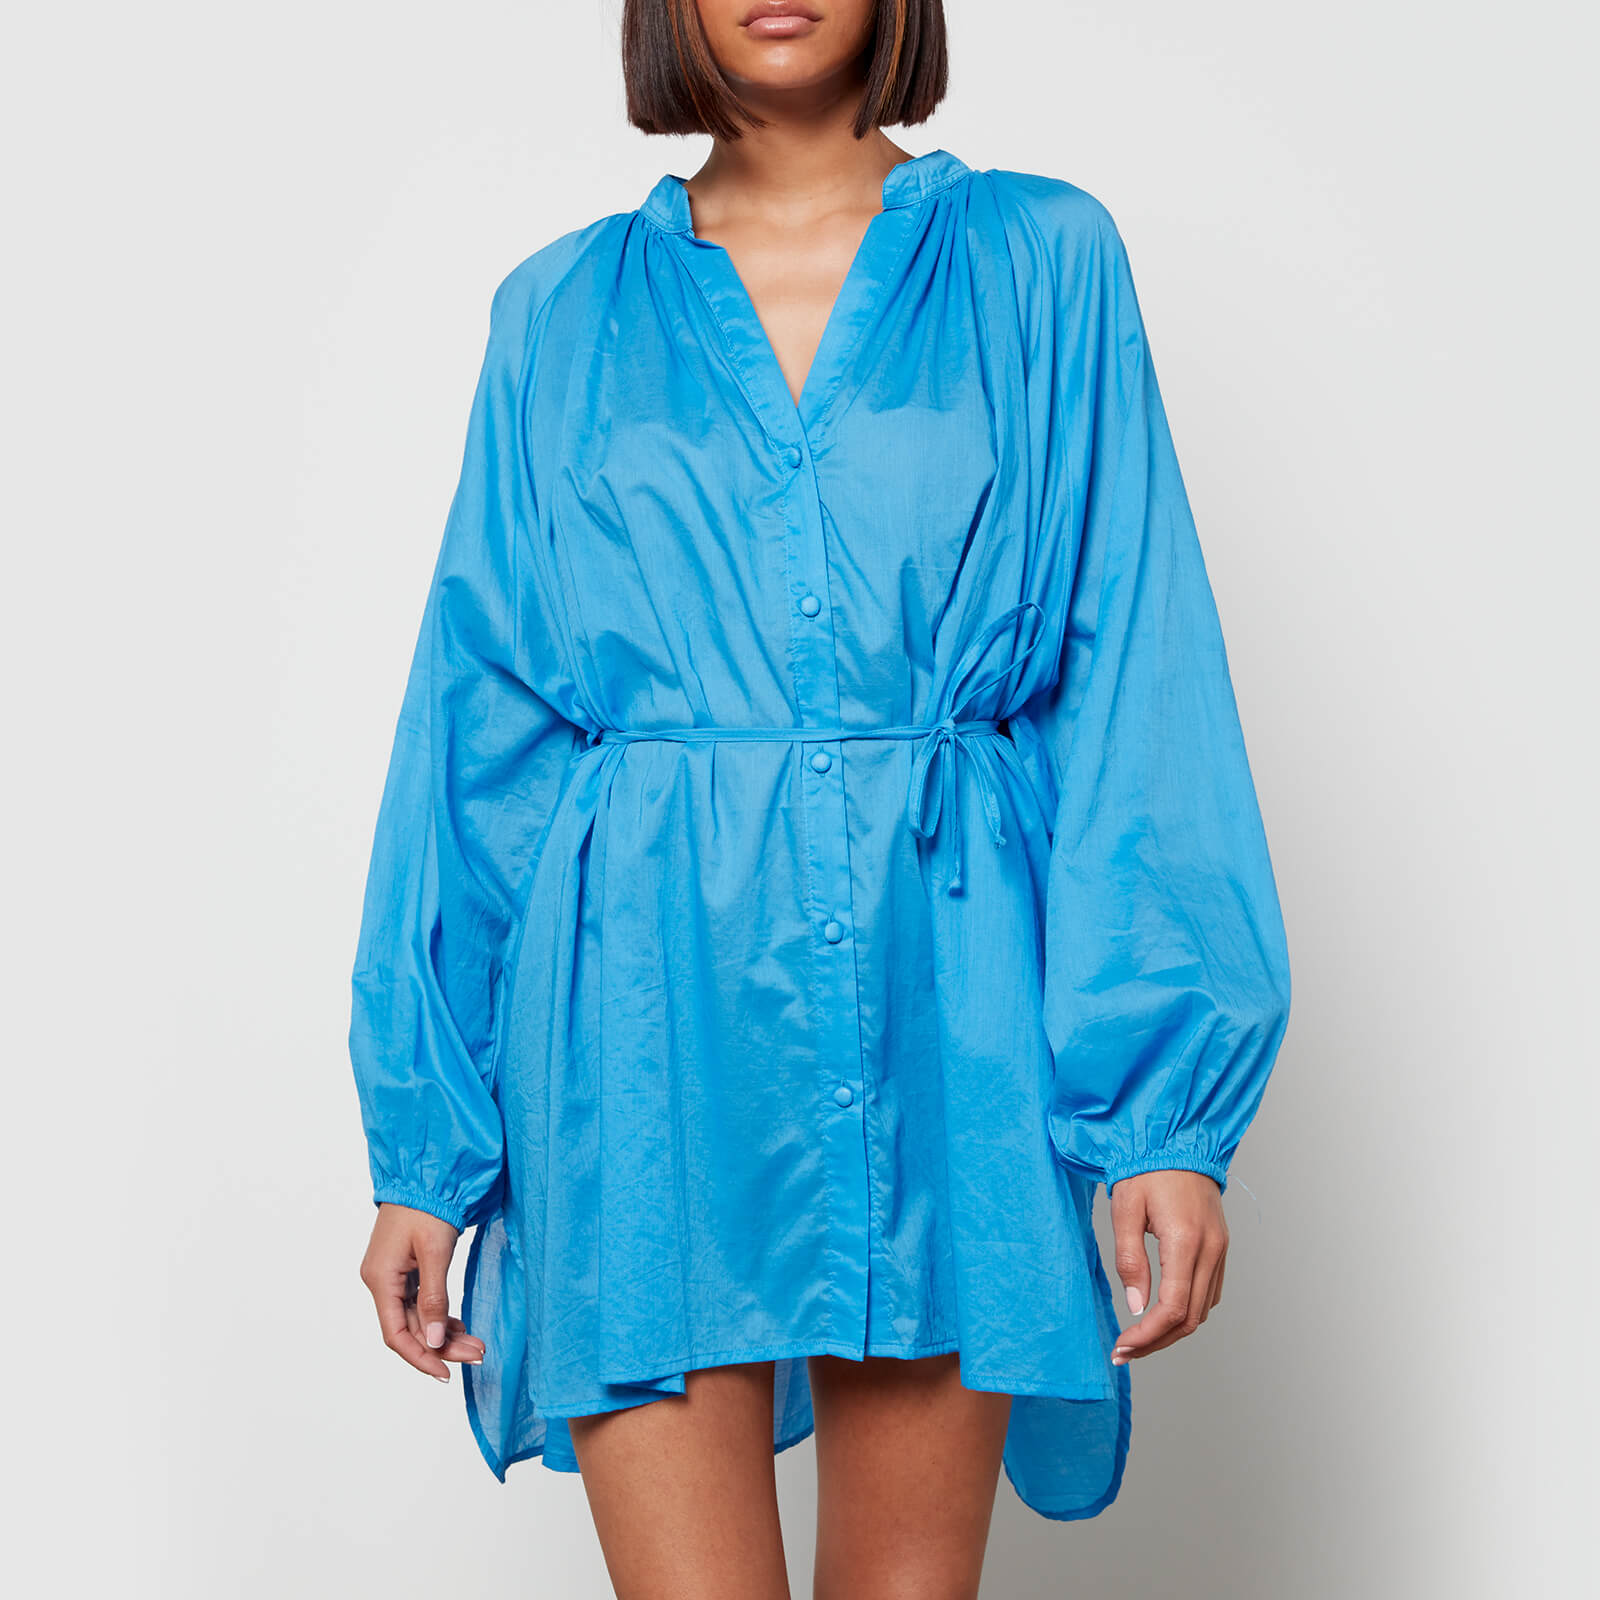 faithfull the brand women's lucita smock dress - plain mediterranean blue - m